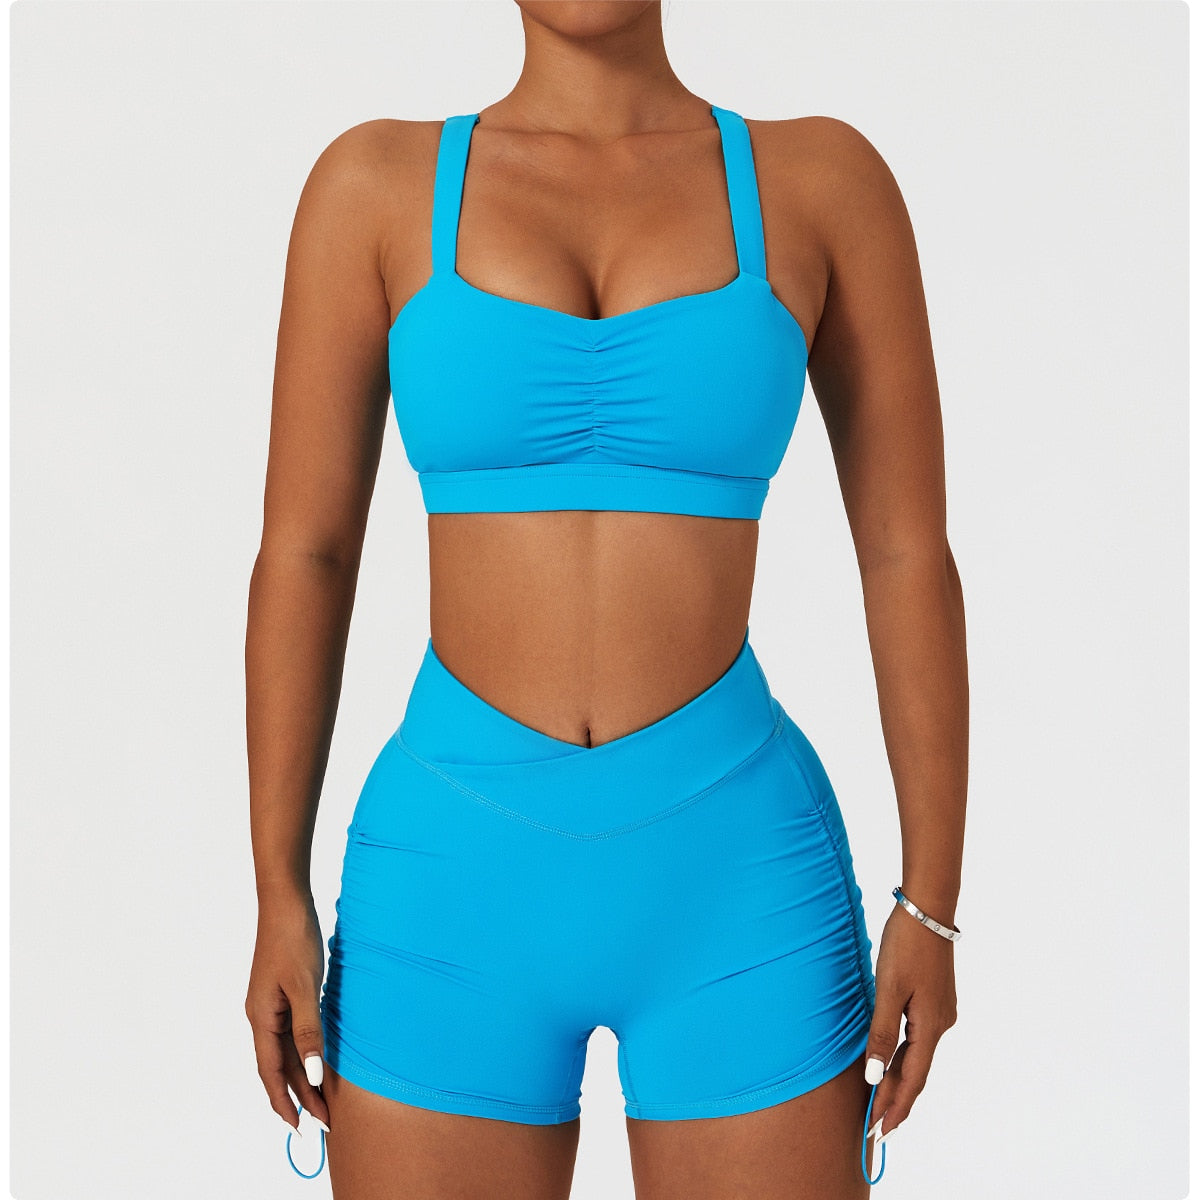 New Fitness Sports Bra for Women Push Up Beautiful Back Crisscross Strappy Running Gym Training Workout Yoga Underwear Crop Tops   59.99 EZYSELLA SHOP